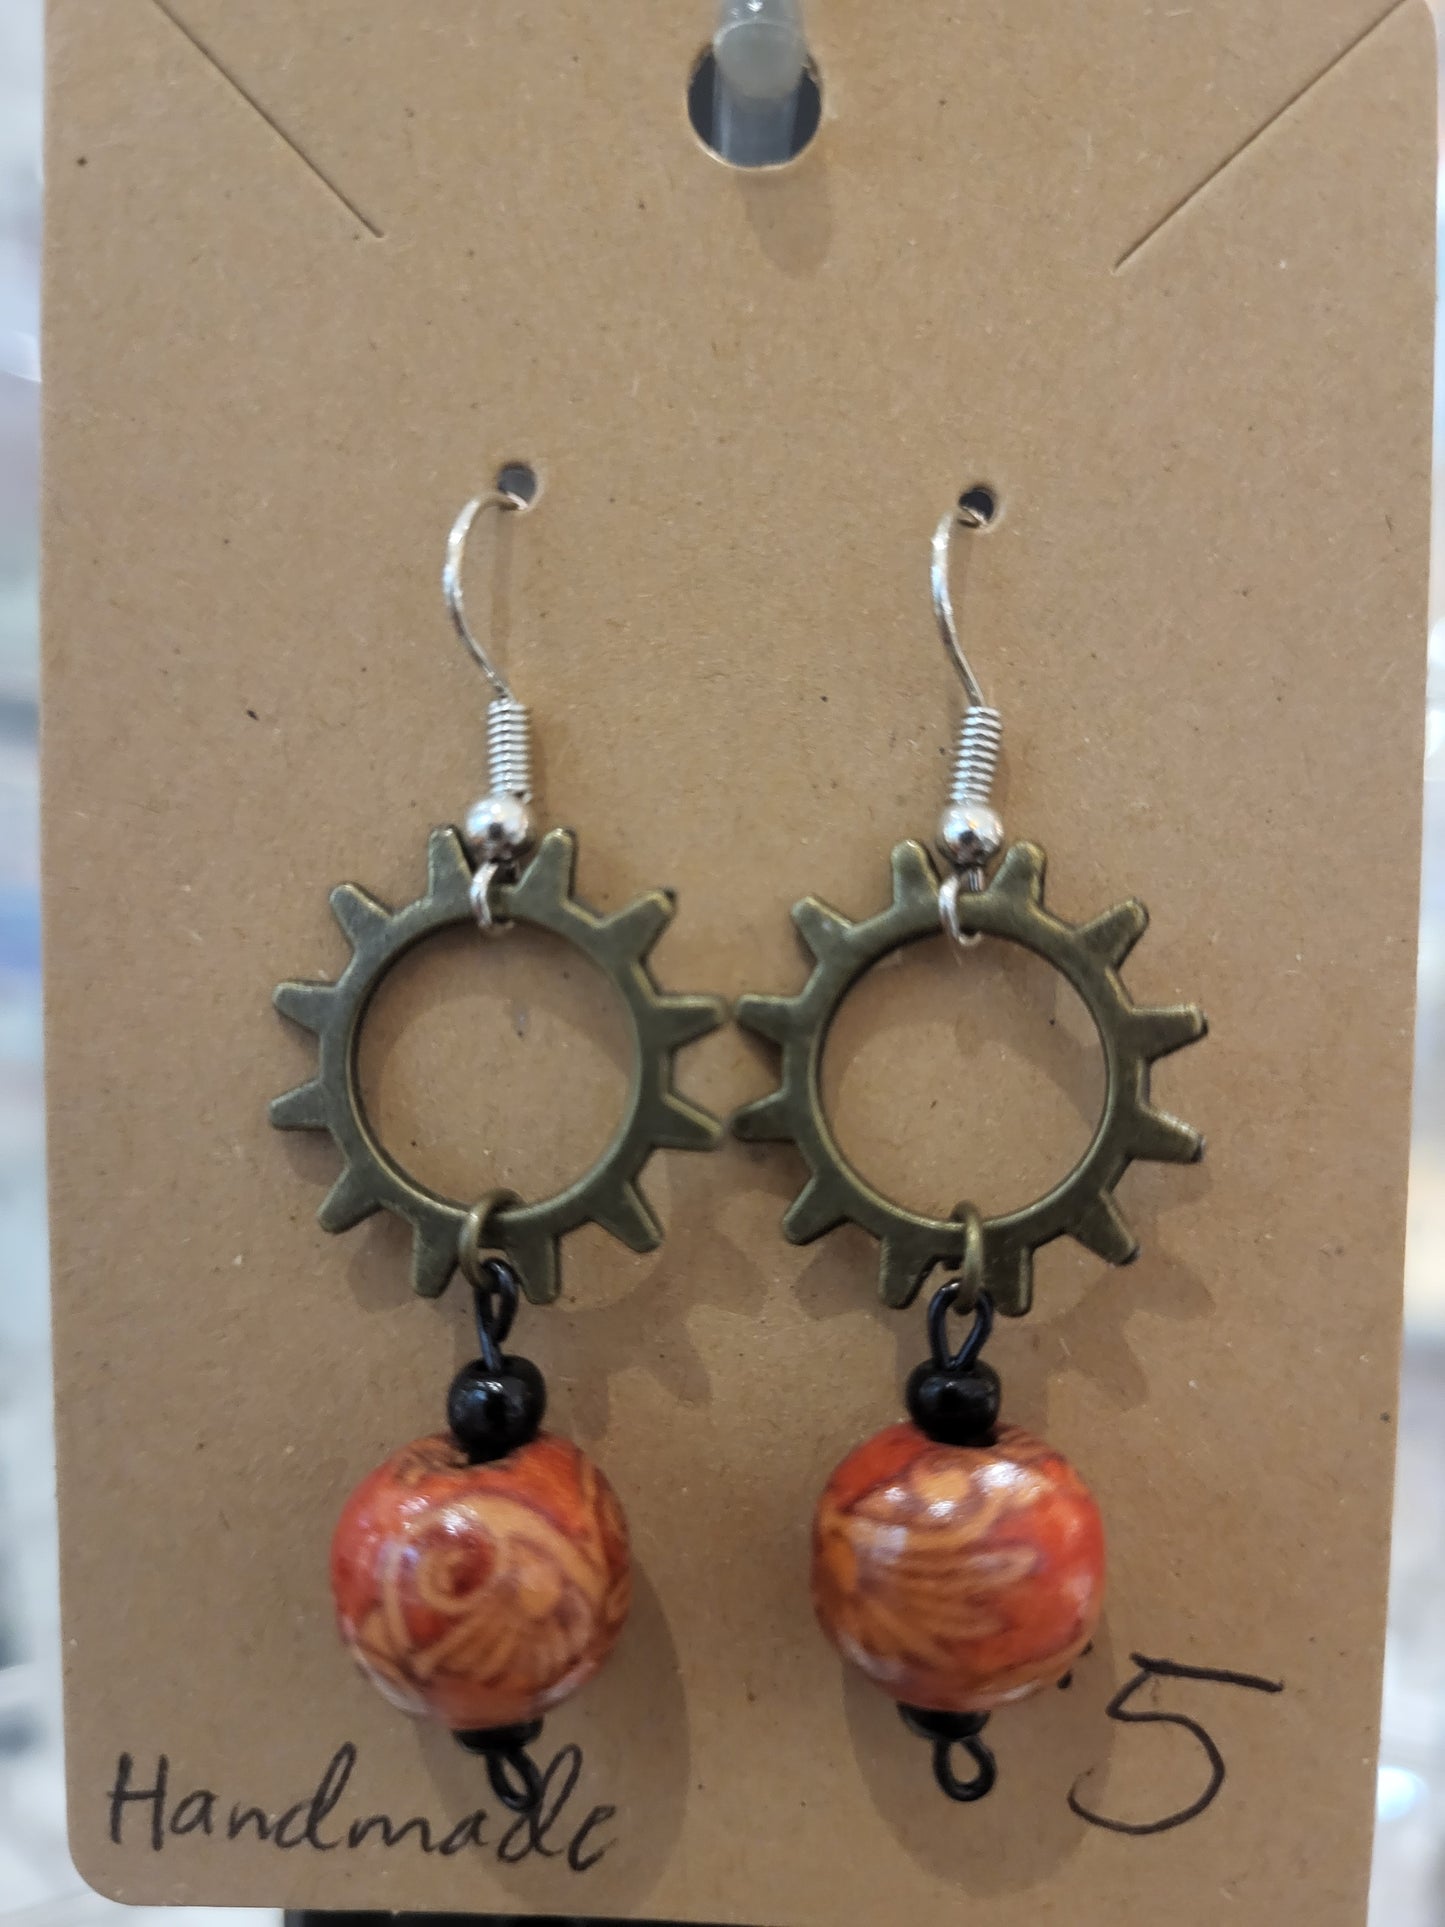 Handmade ornate red bead and sun gear earrings top